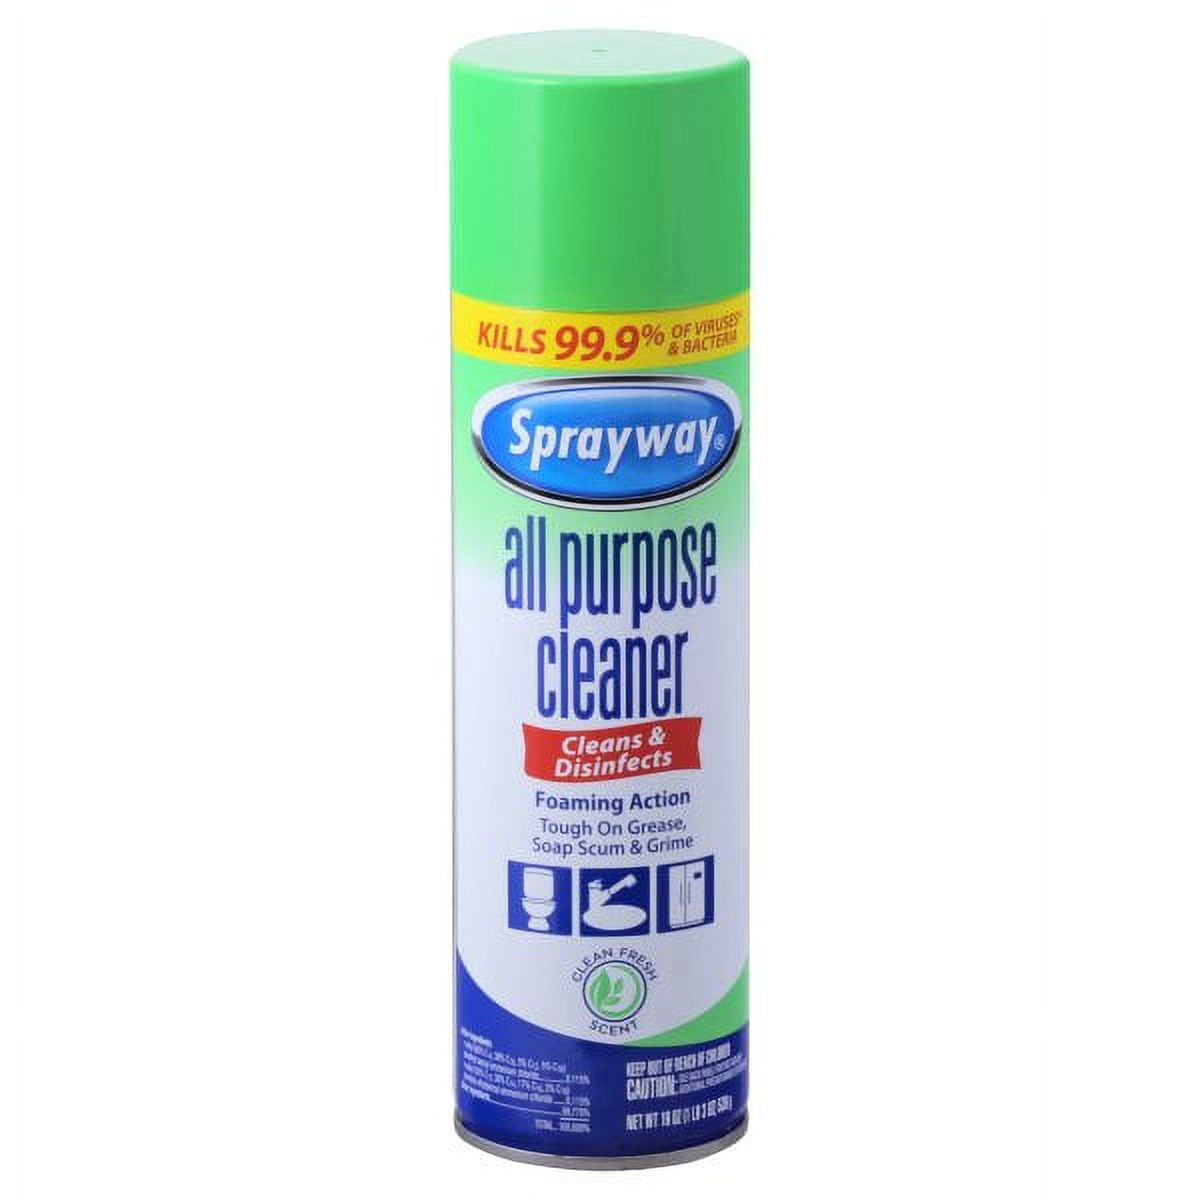 Sprayway SW030 Crazy Clean All Purpose Cleaner, 15 oz